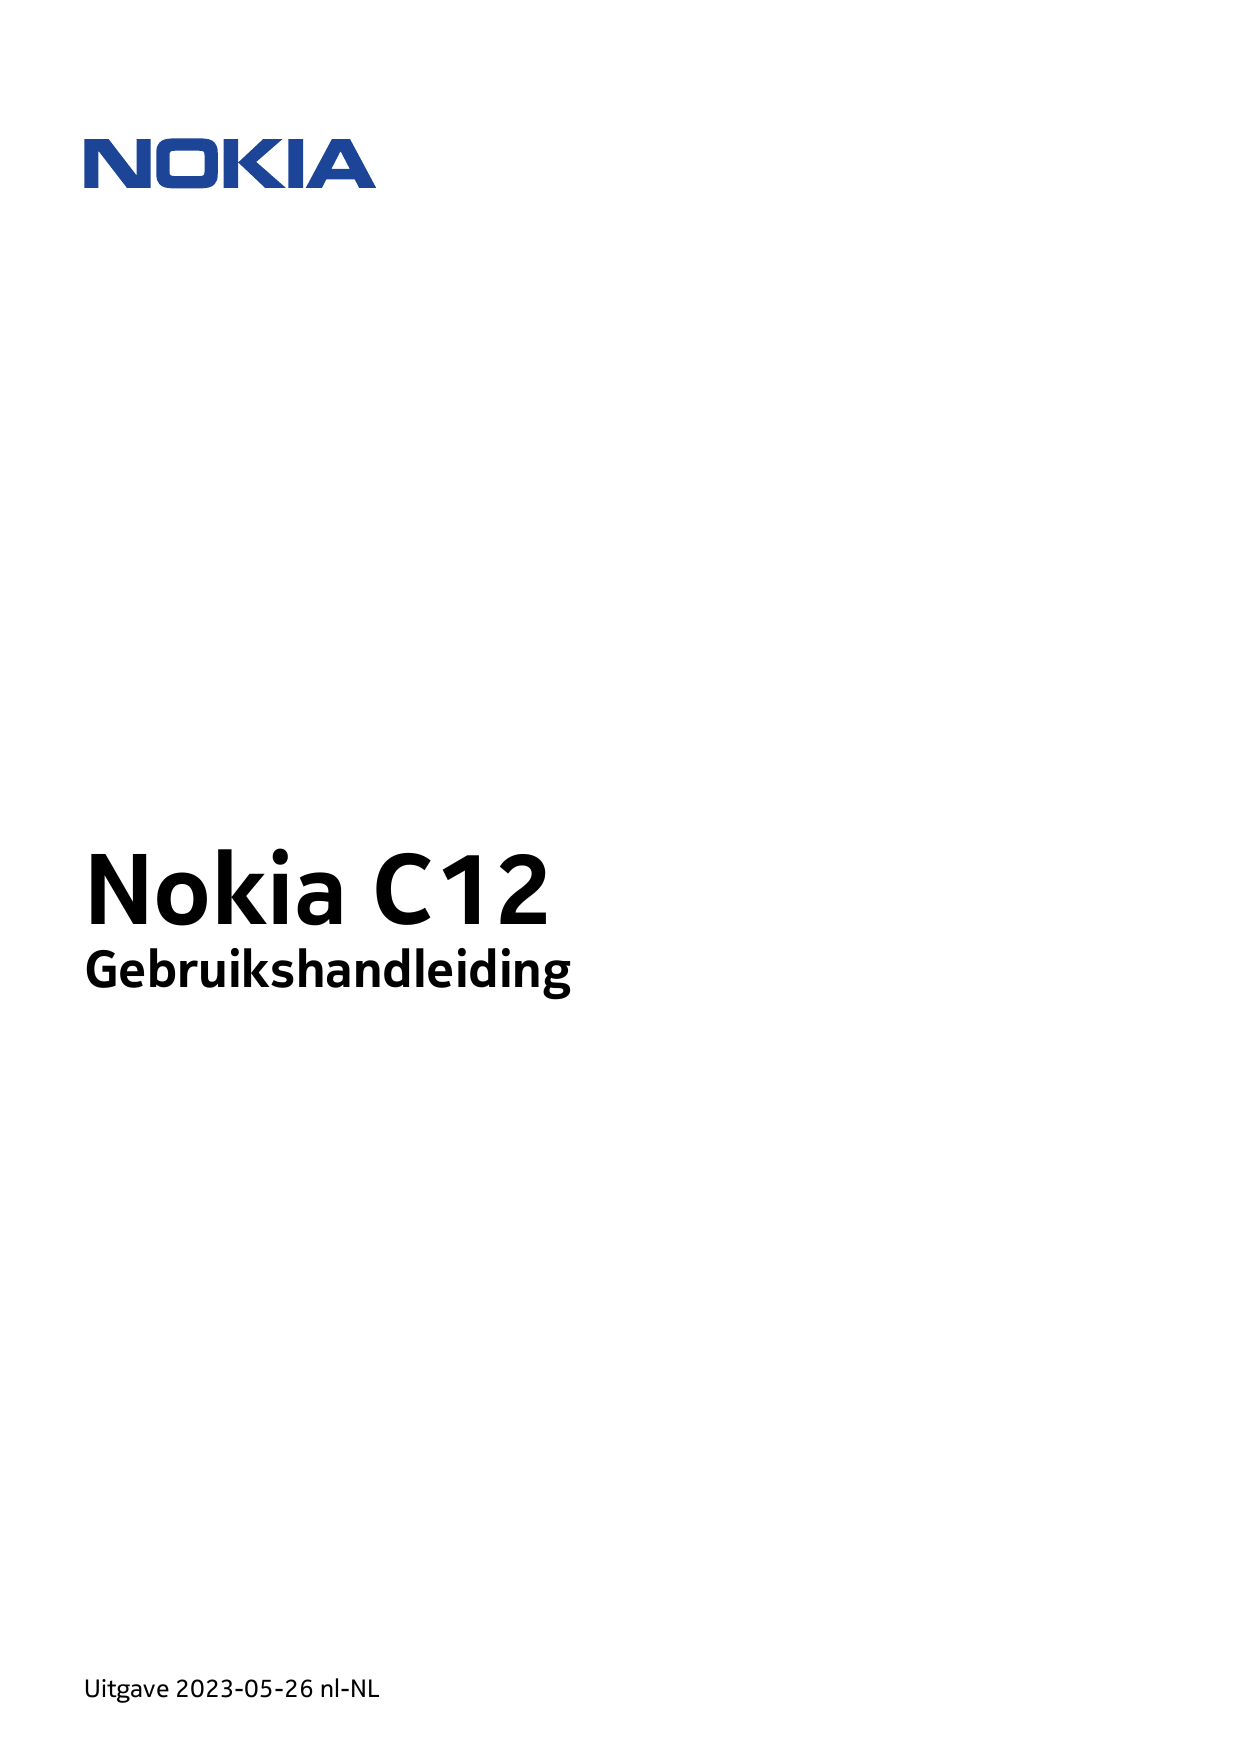 Nokia C12GebruikshandleidingUitgave 2023-05-26 nl-NL